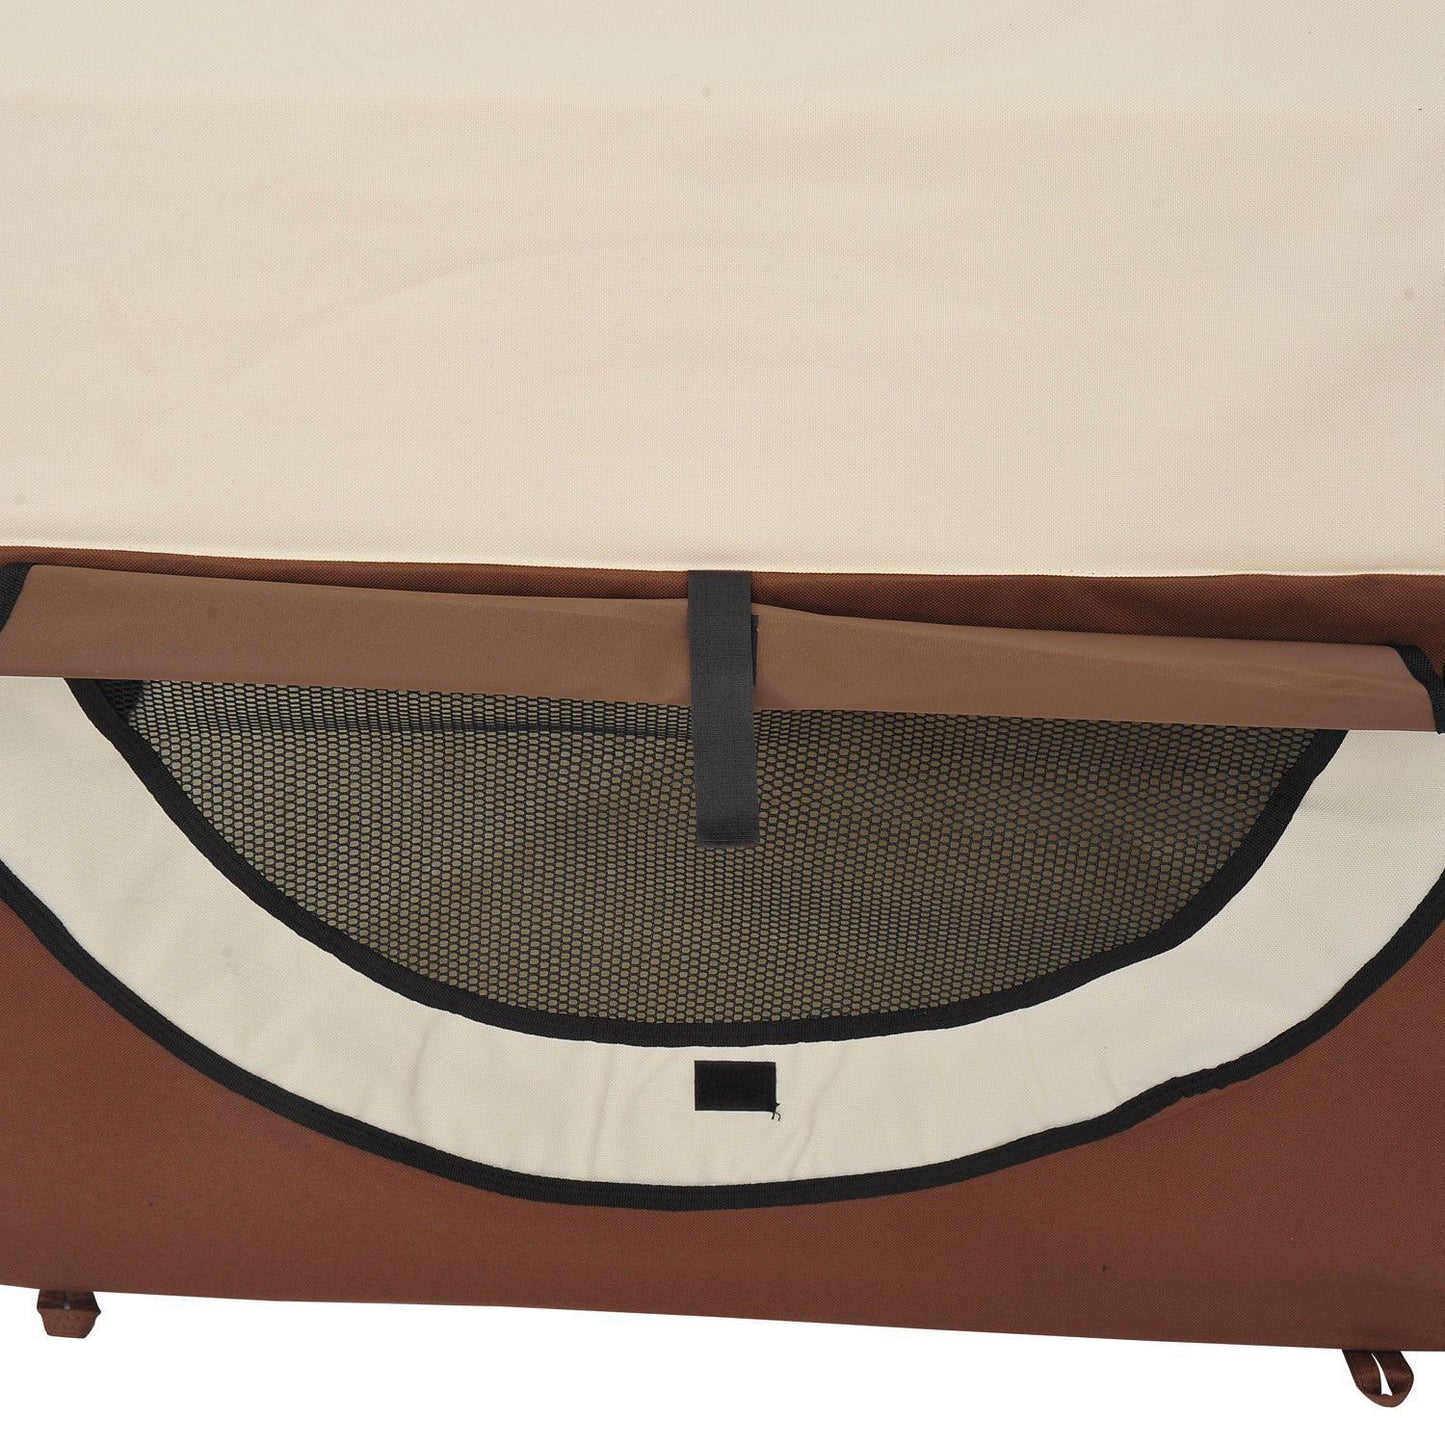 Nancy's Welches Foldable Dog Transport Box - Brown - Fabric, PVC, Steel - 27.56 cm x 20.08 cm x 23.23 cm